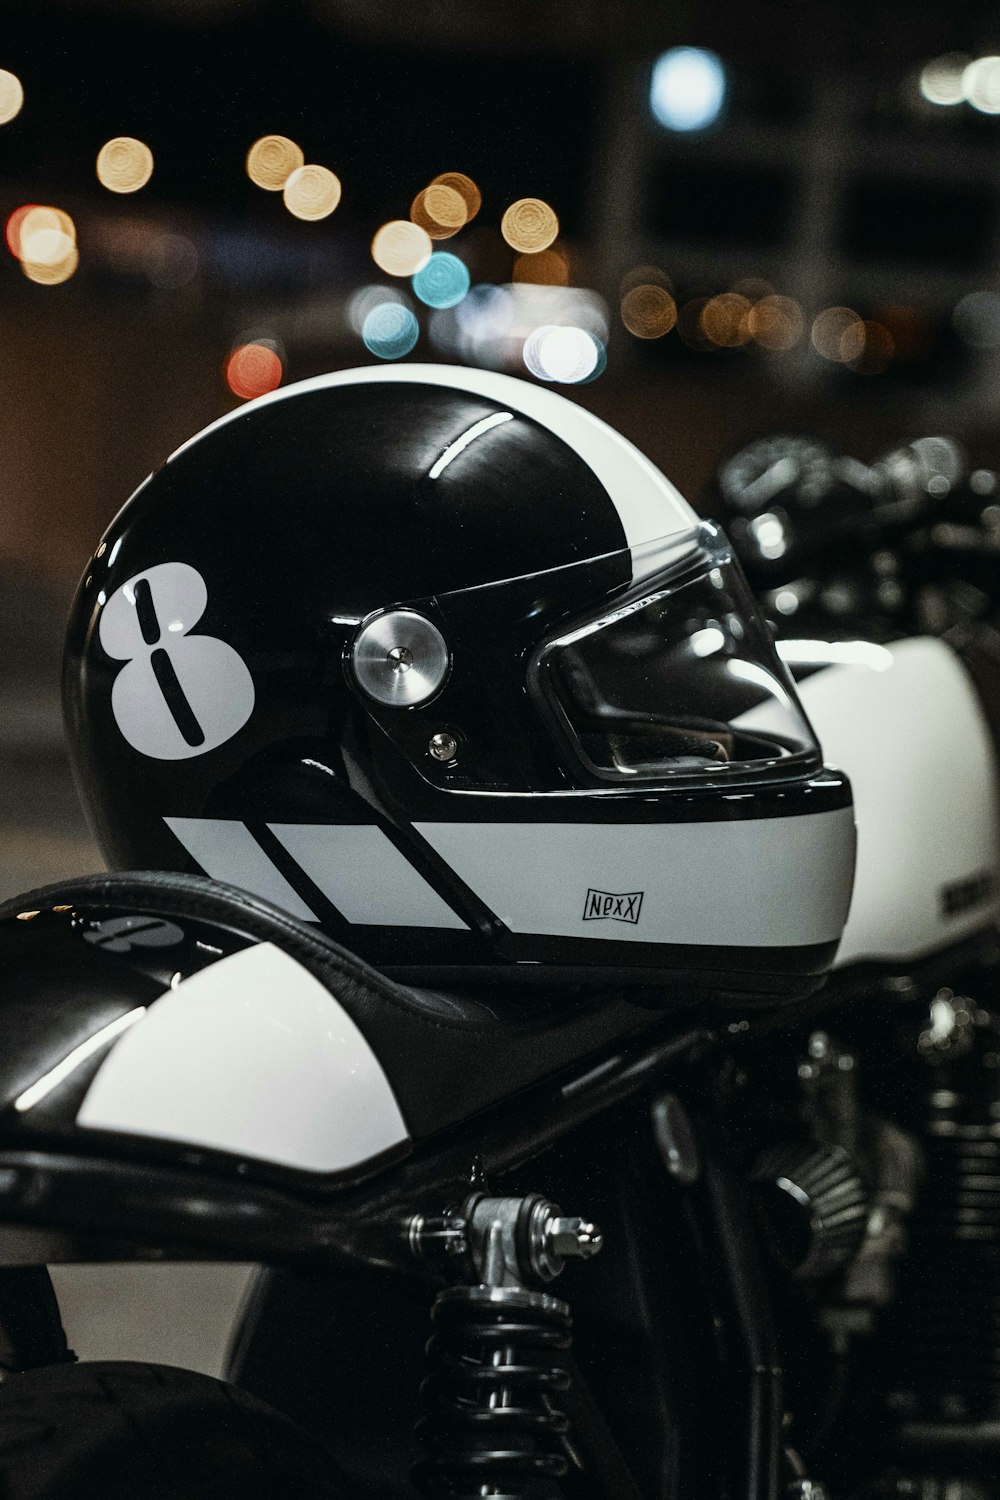 white and black helmet on motorcycle